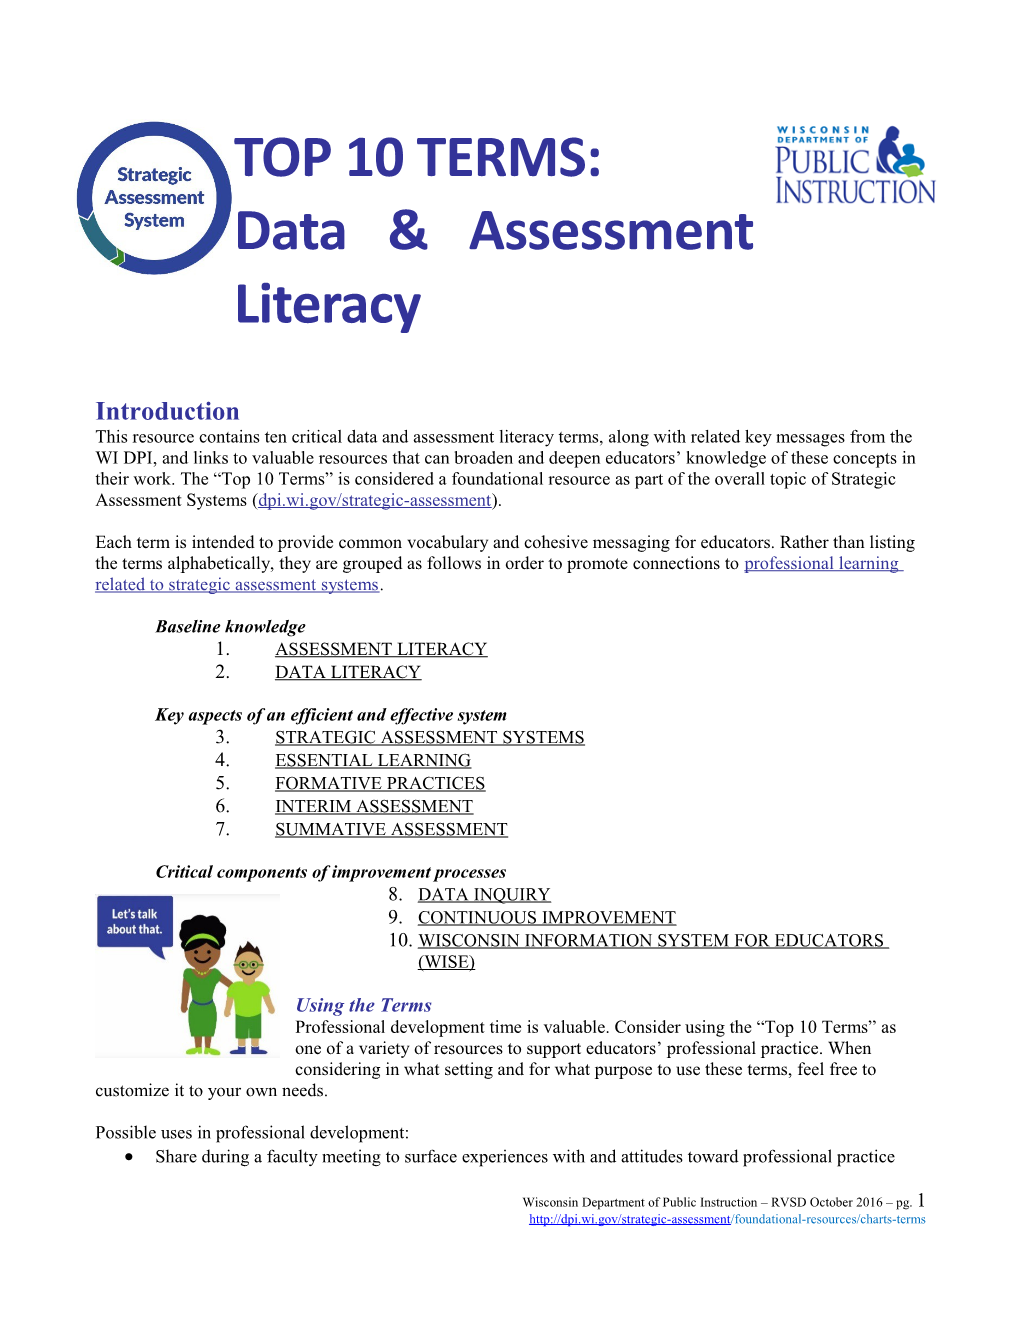 Data & Assessment Literacy